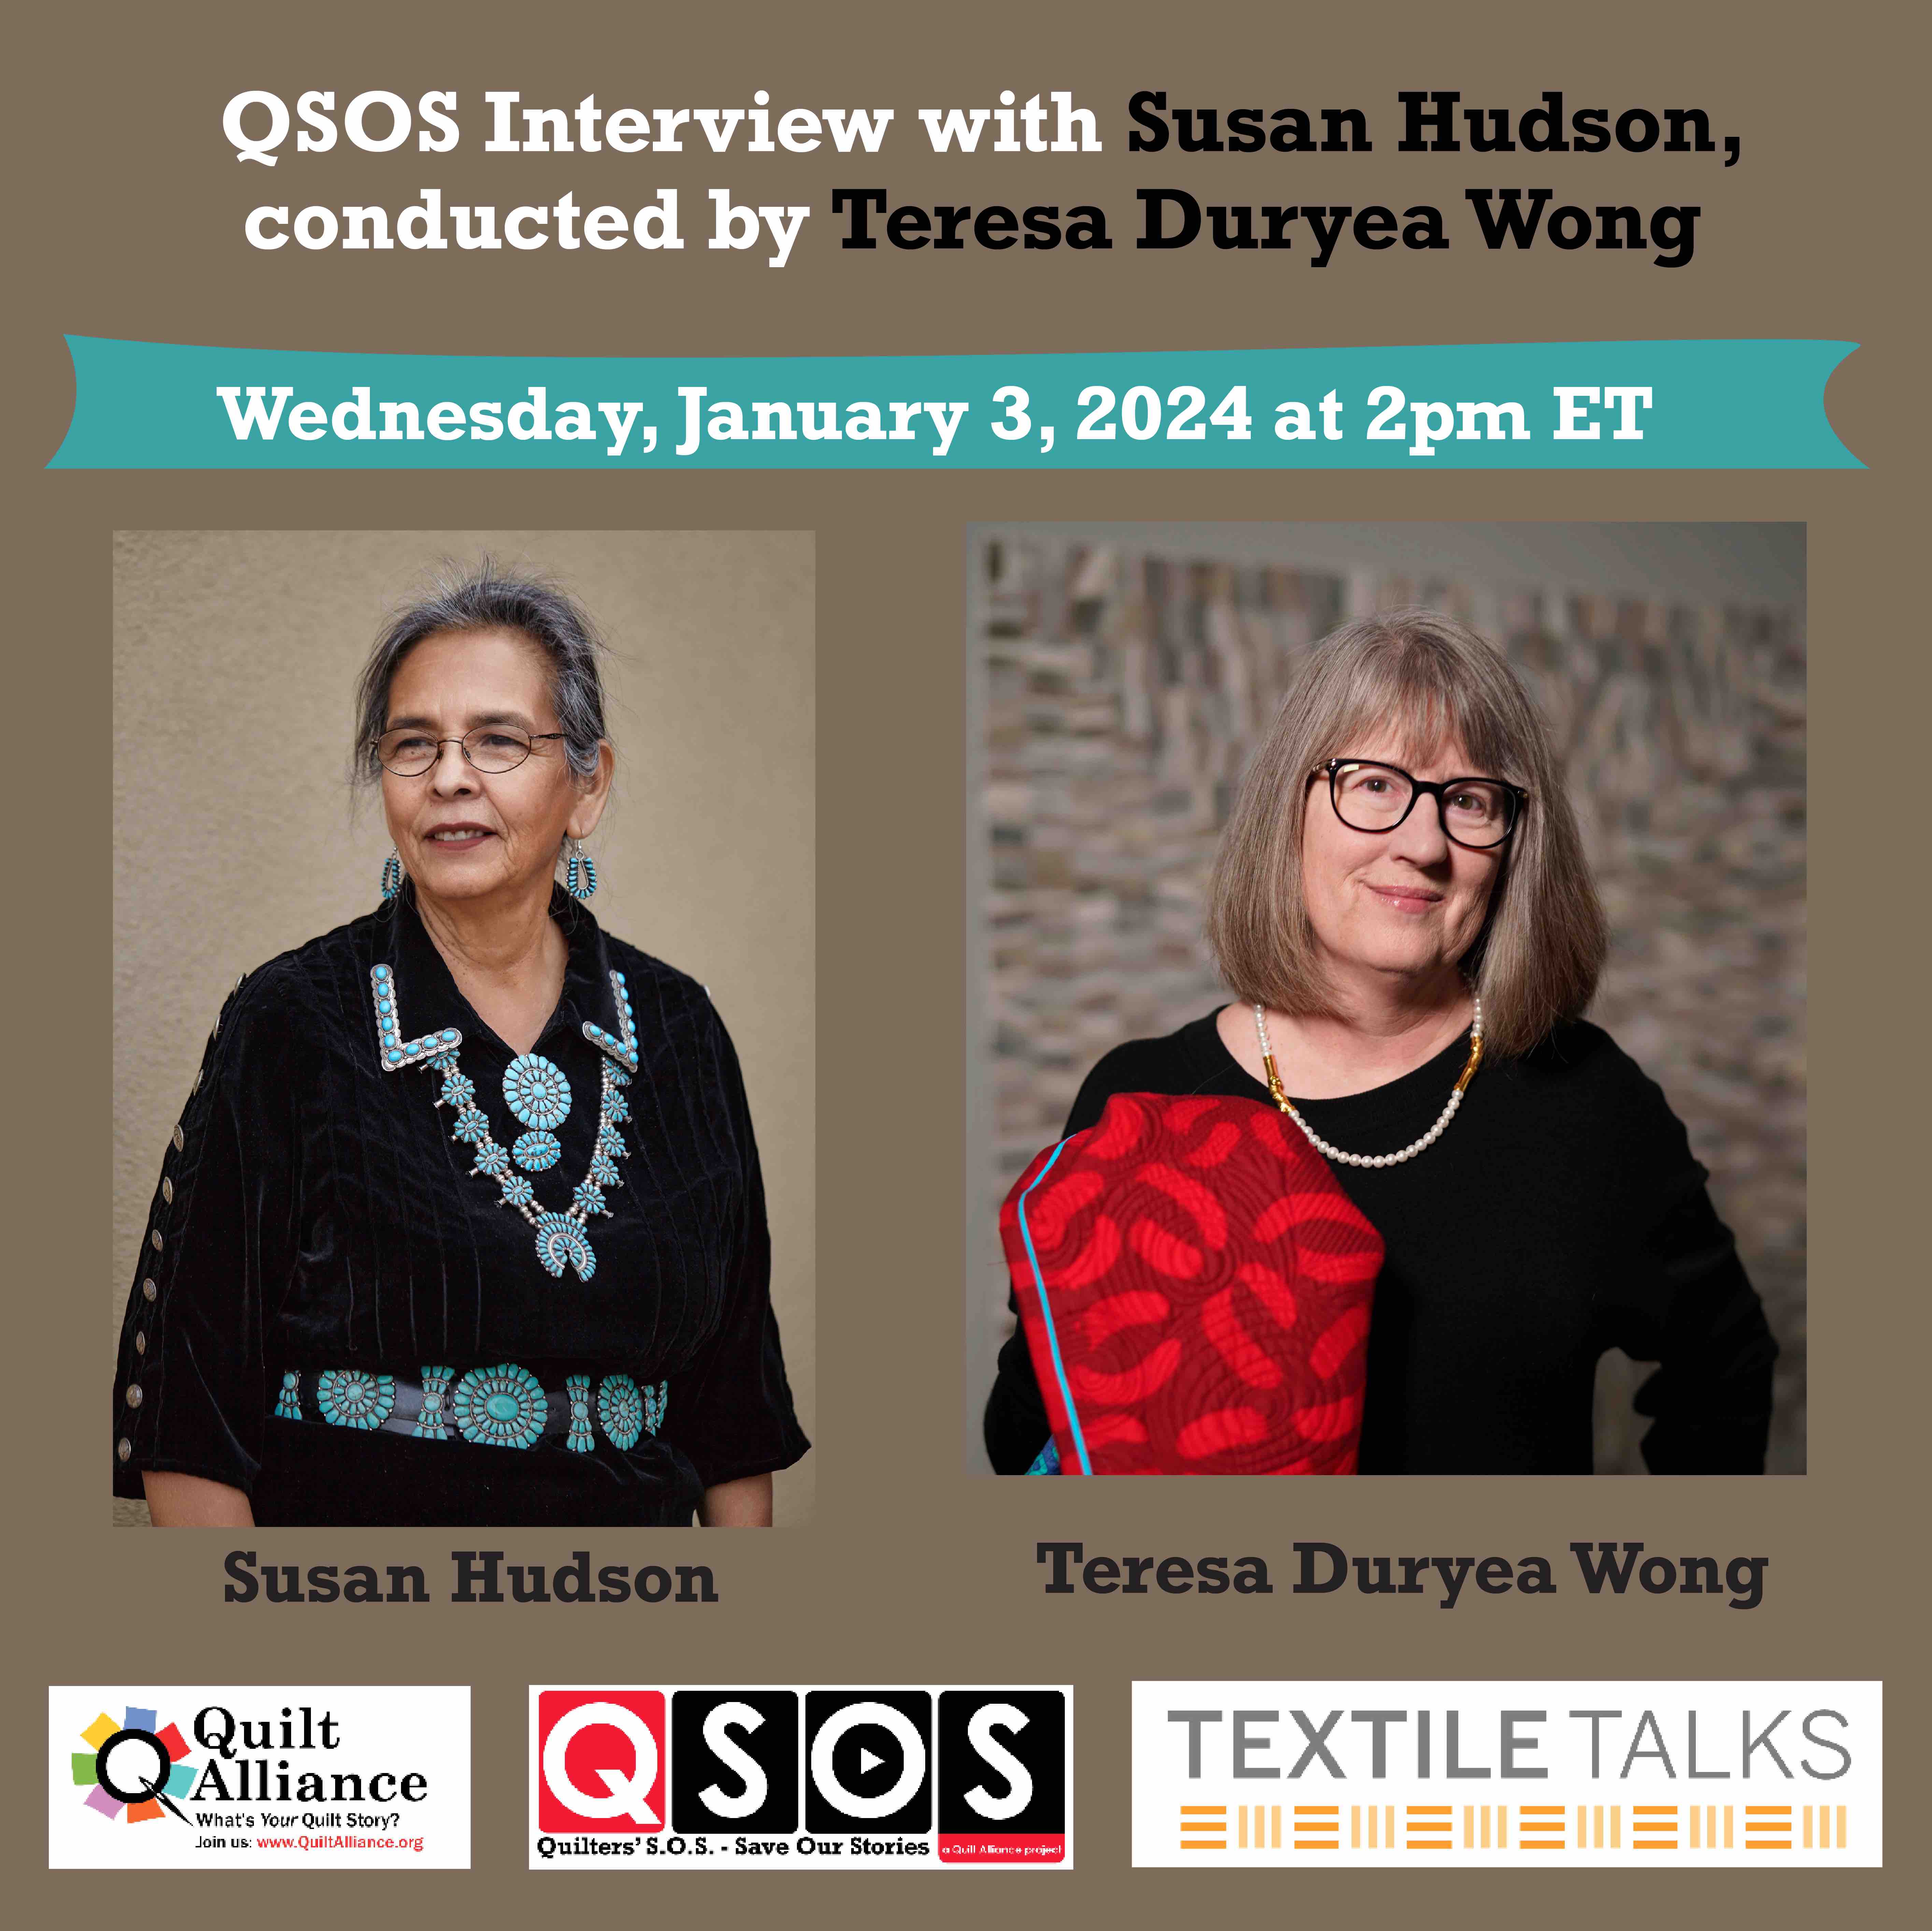 textile-talk-qsos-interview-with-susan-hudson-and-teresa-duryea-wong.jpg